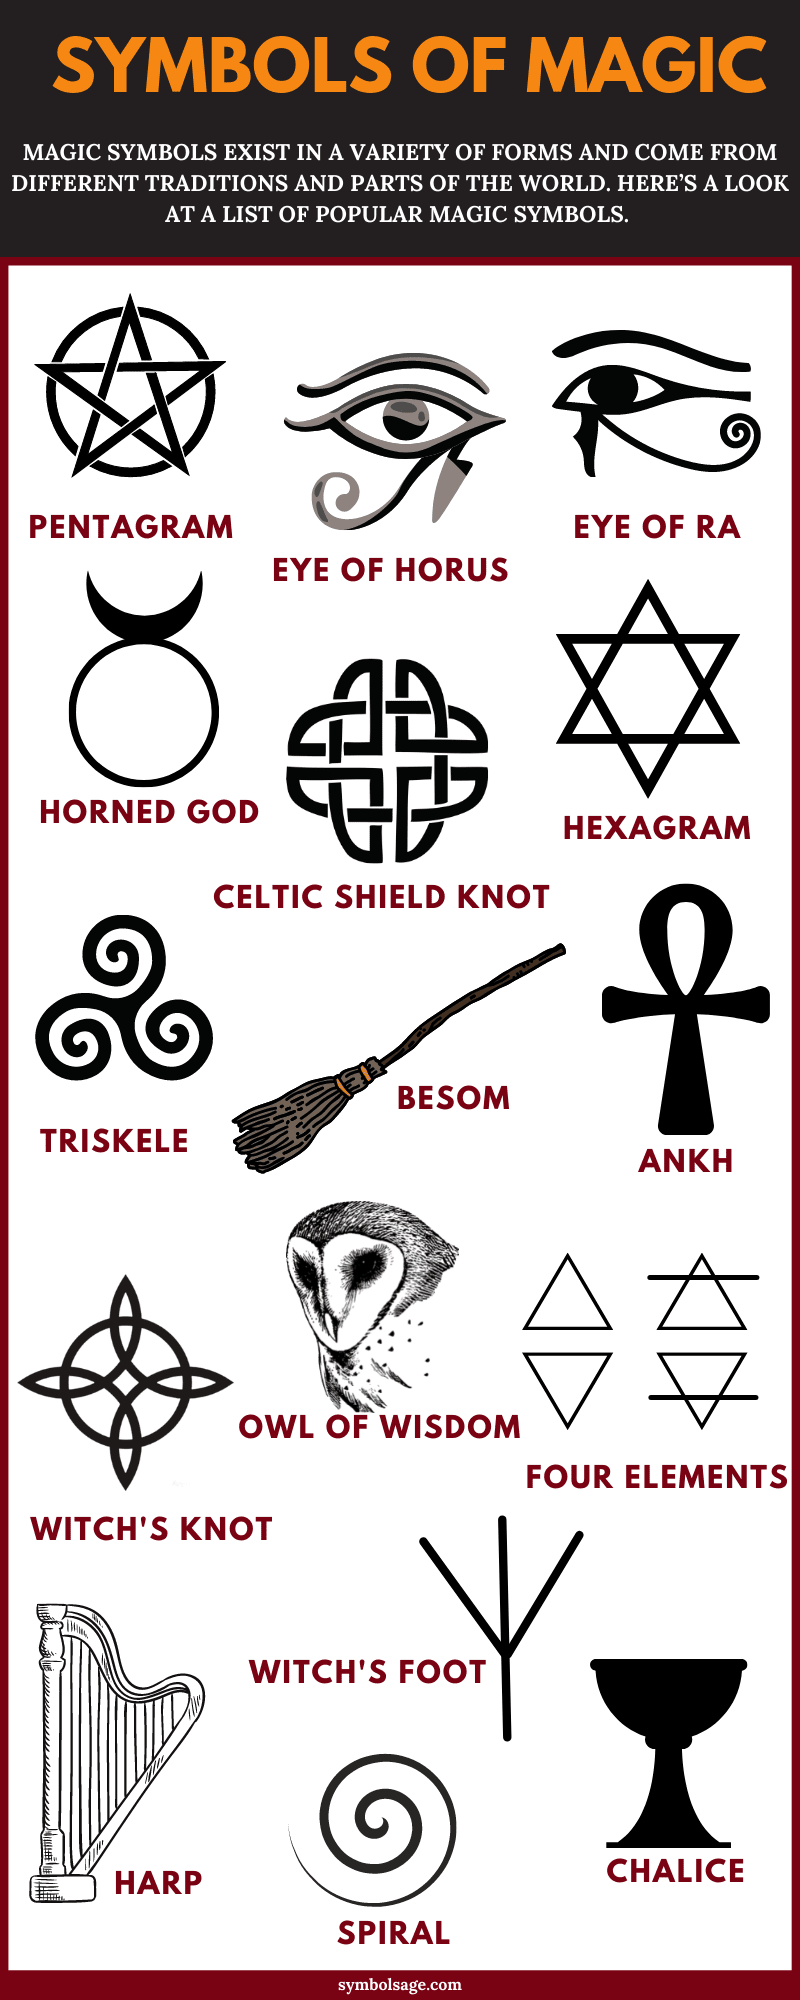 Symbols of magic